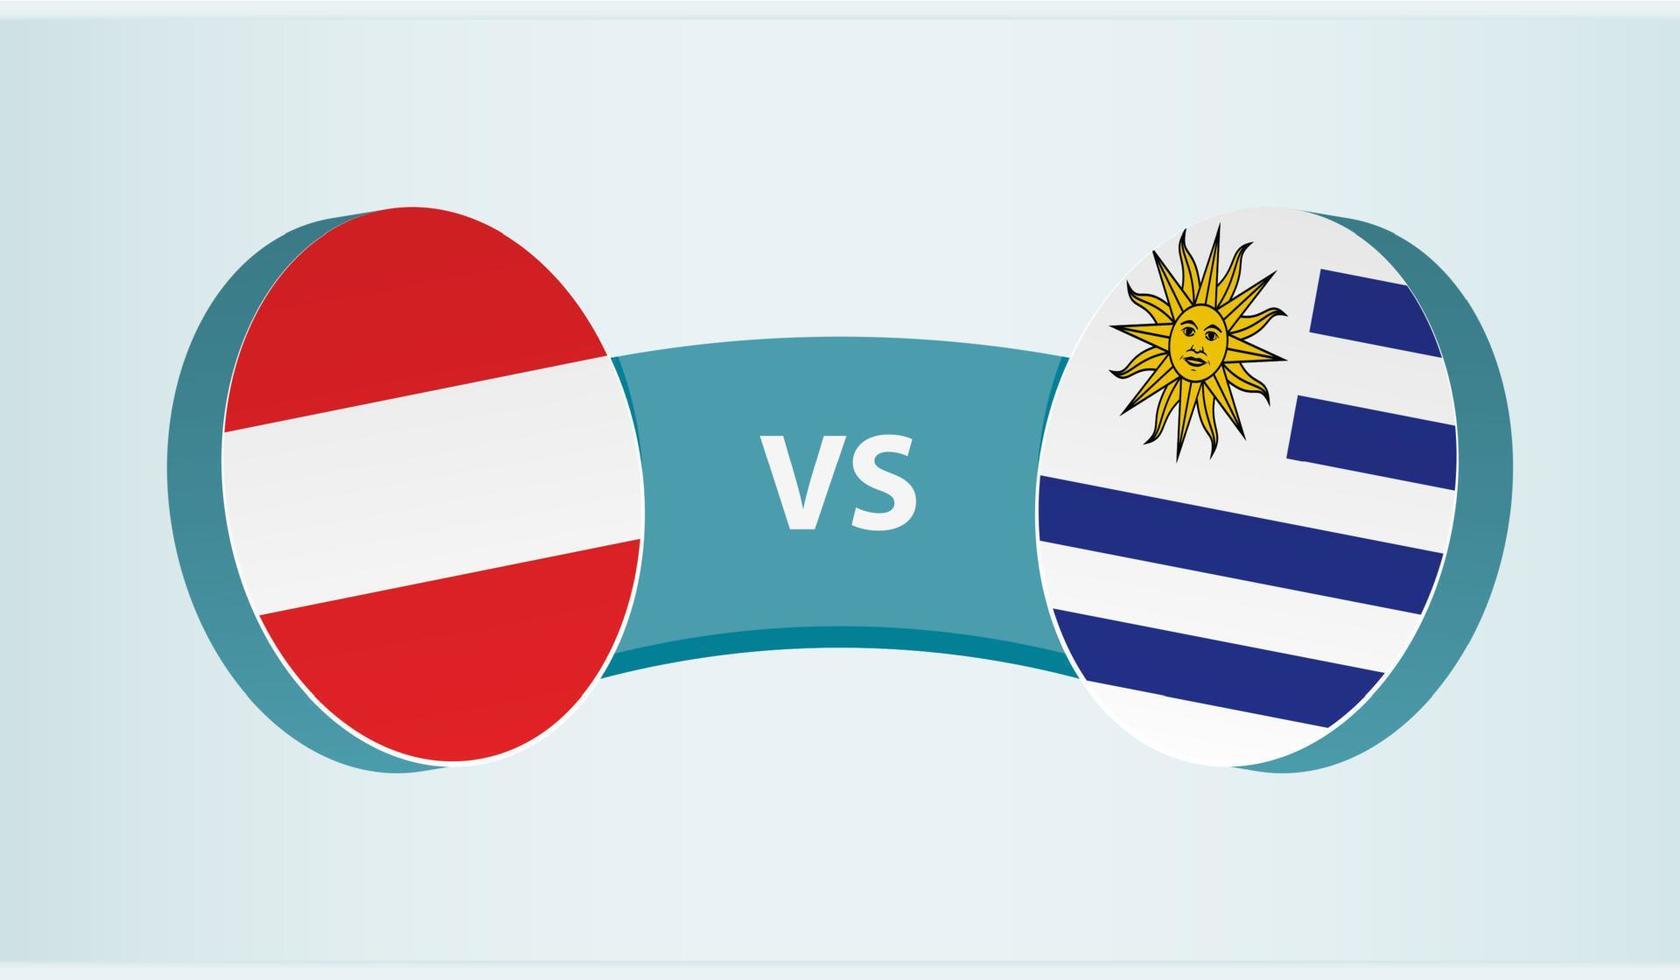 Austria versus Uruguay, team sports competition concept. vector